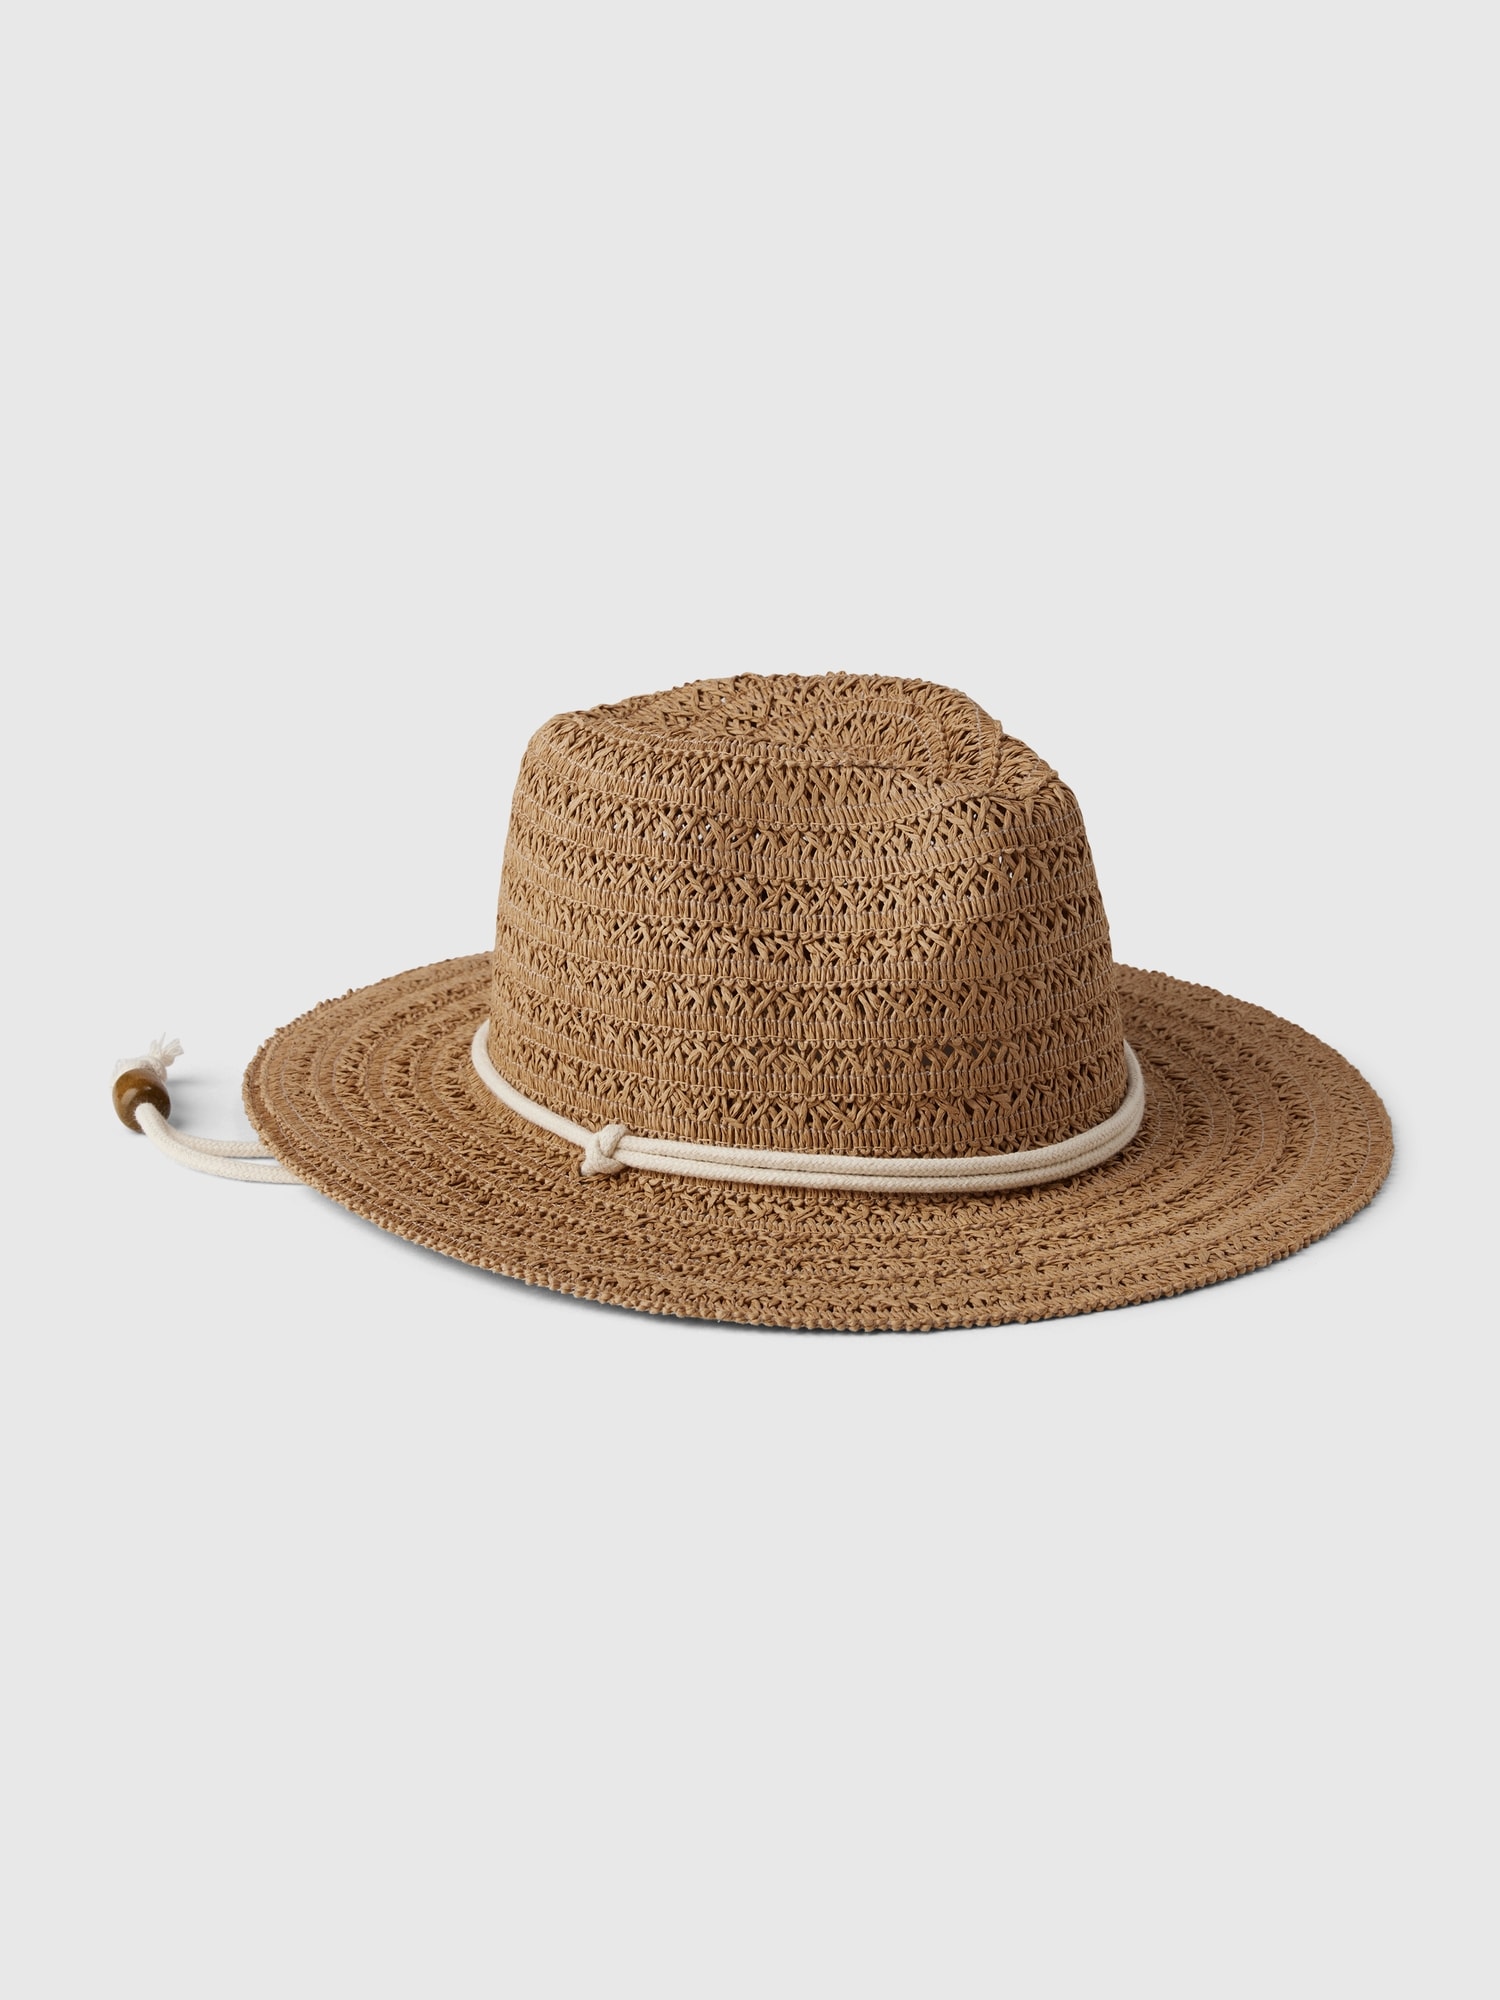 Gap Straw Western Hat In Natural